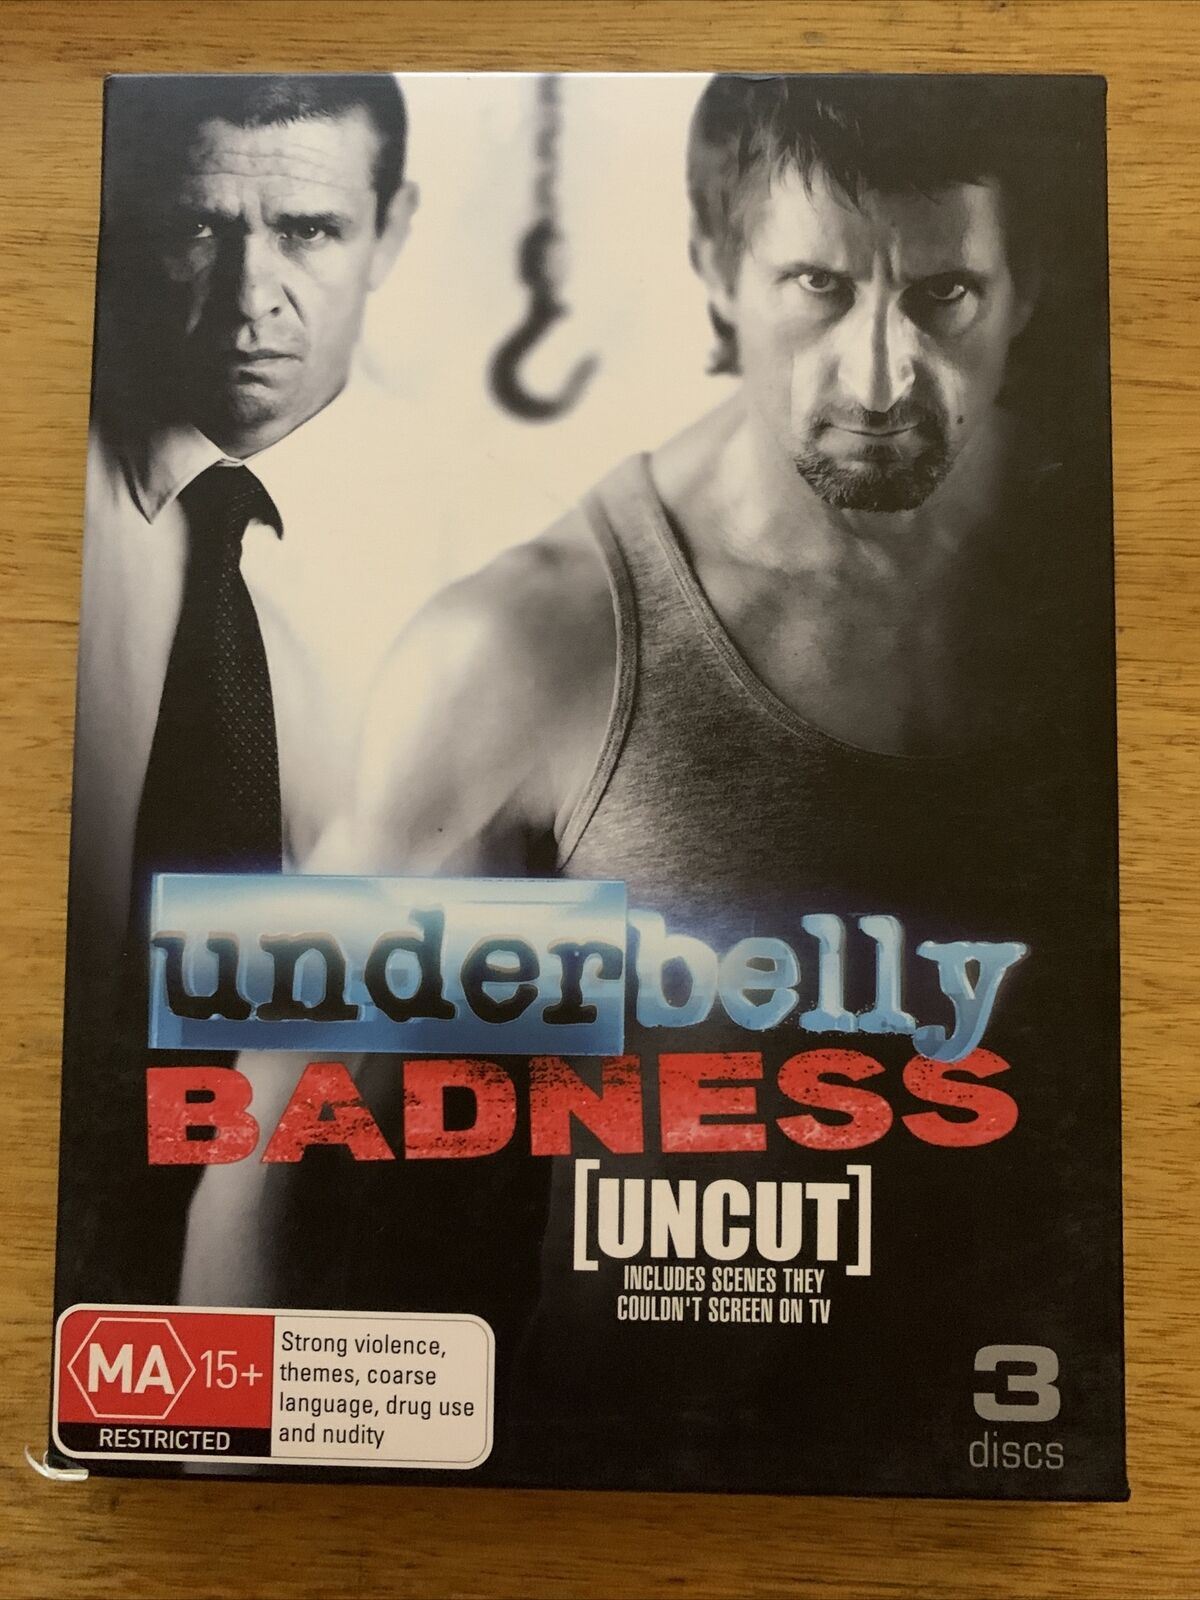 Underbelly Badness - Uncut (DVD, 2012) Matt Nable, Jonathan LaPaglia. Region 4